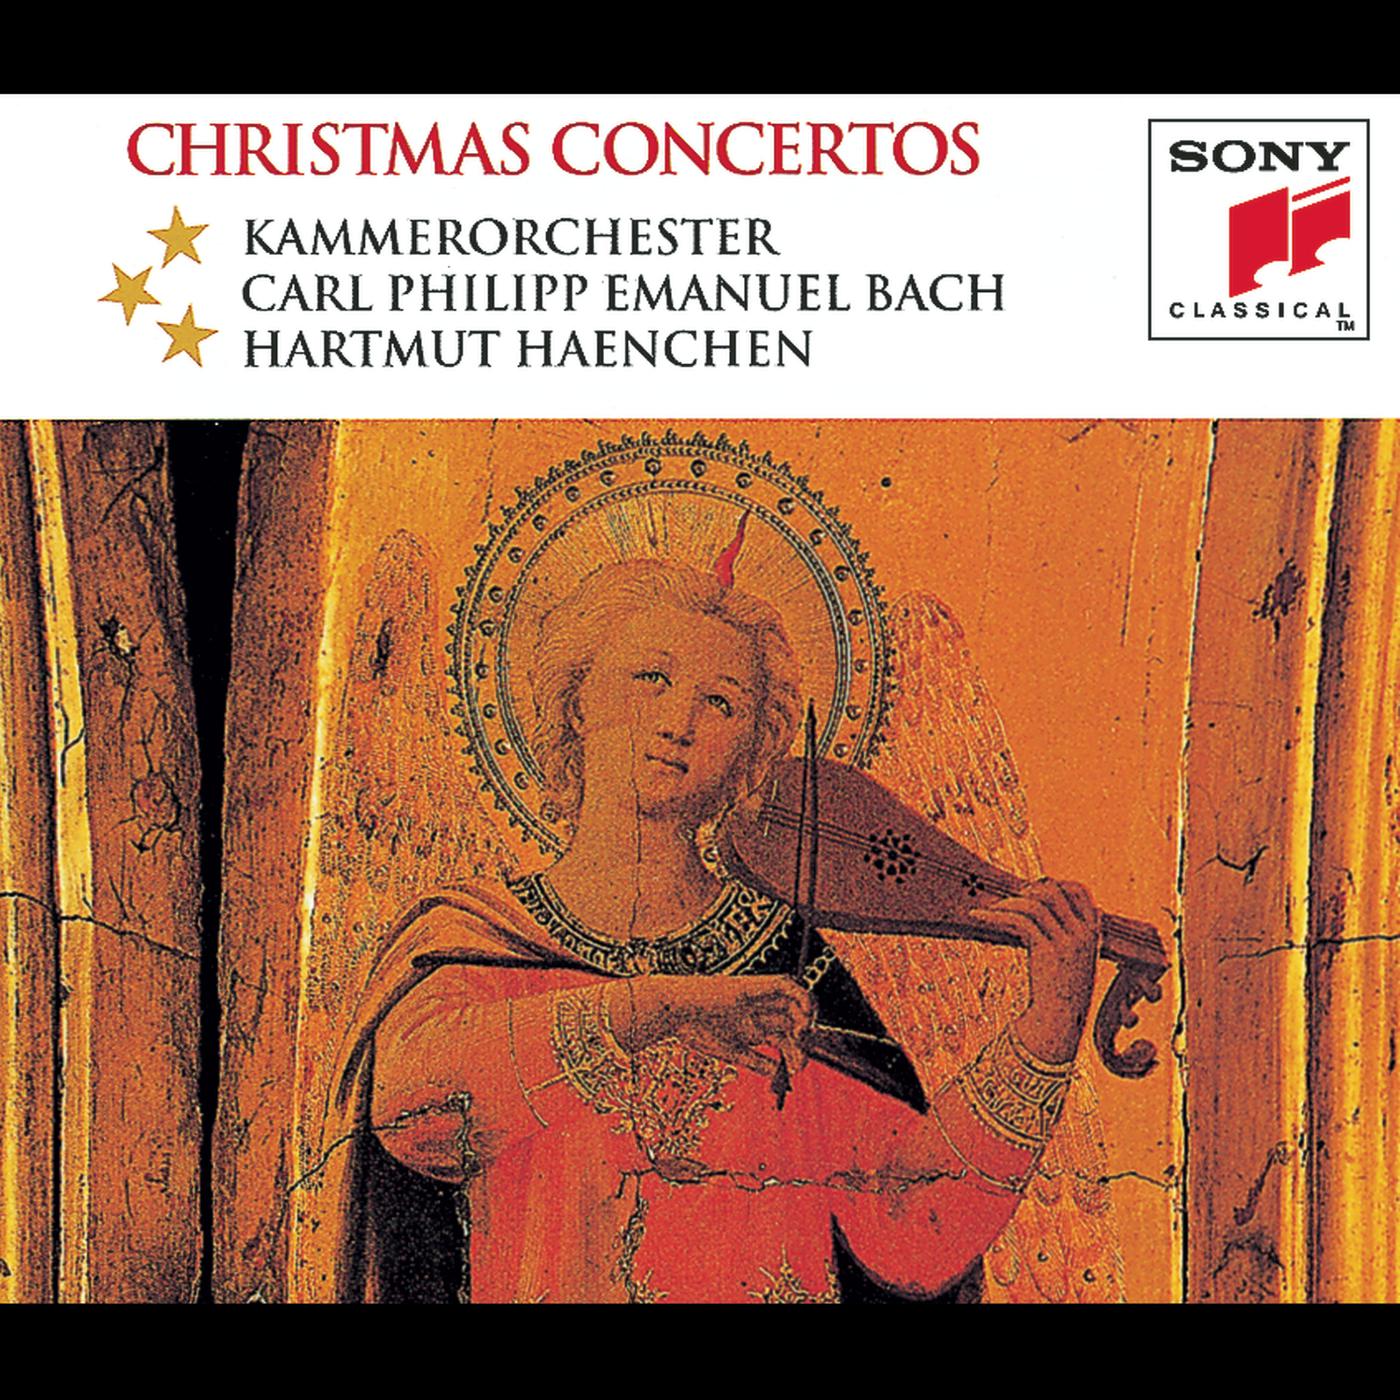 Concerto Grosso in G Minor, Op. 6, No. 8 "Christmas Concerto":V. Allegro